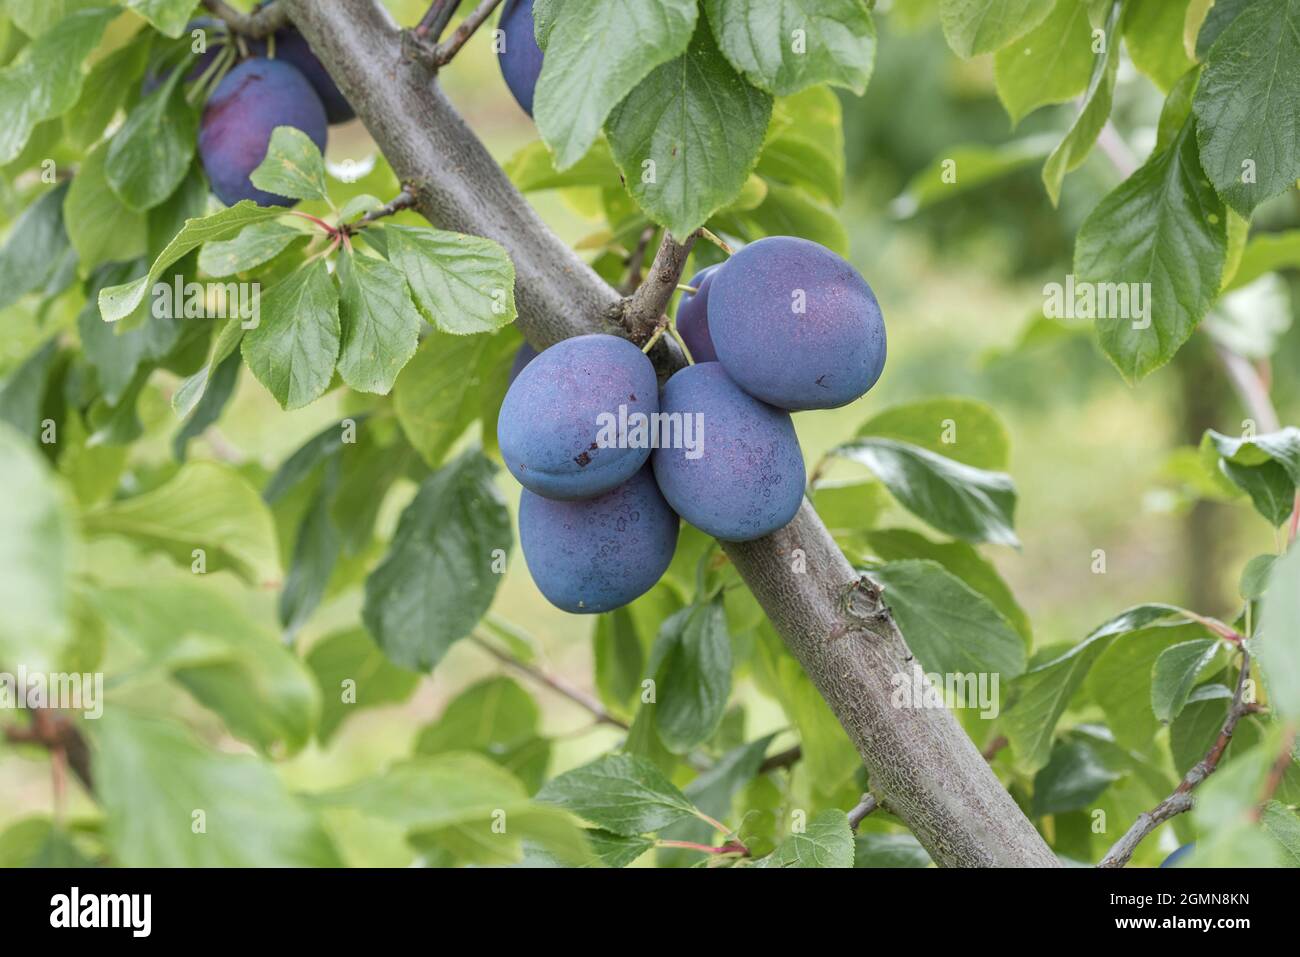 European plum (Prunus domestica 'President', Prunus domestica President), plums on a twig, cultivar President Stock Photo